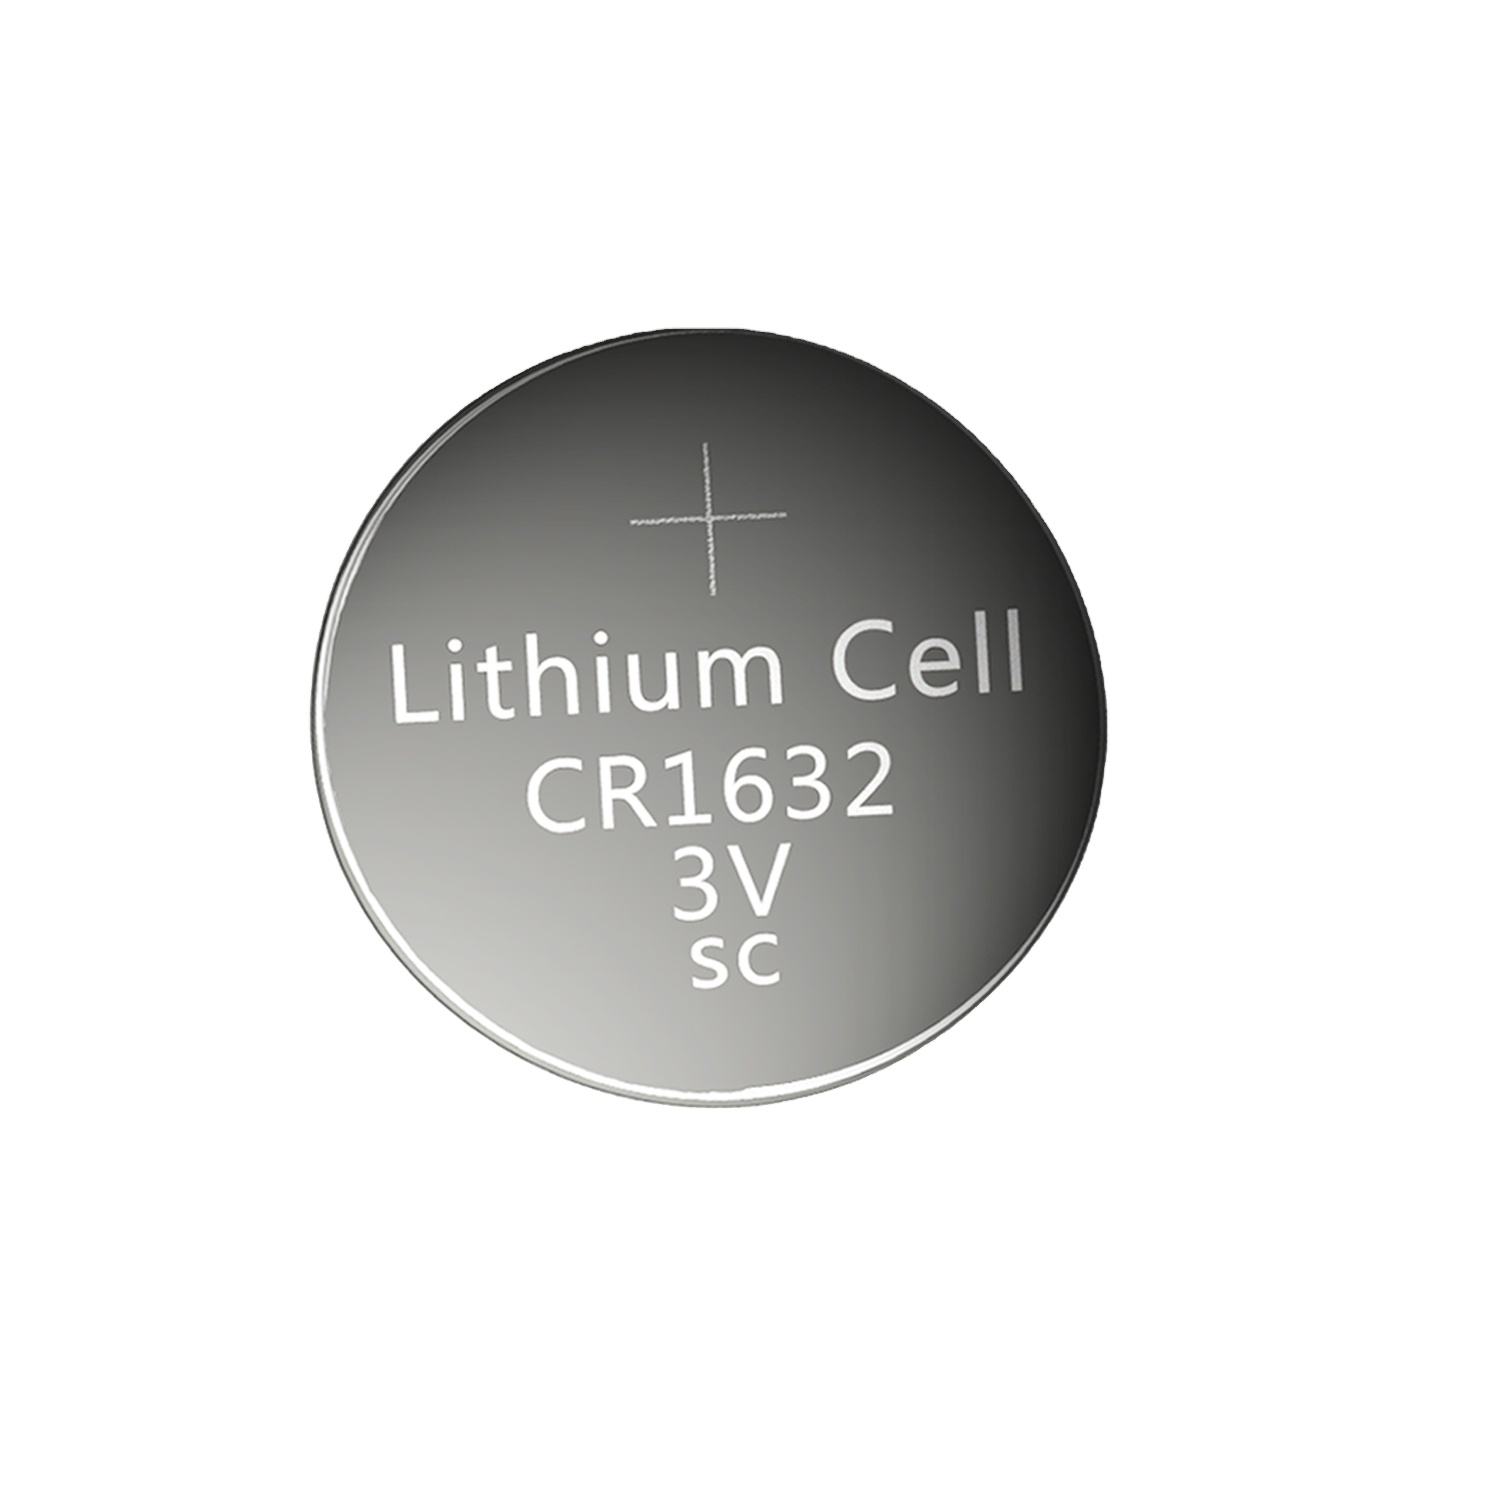 CR1632 Lithium Battery